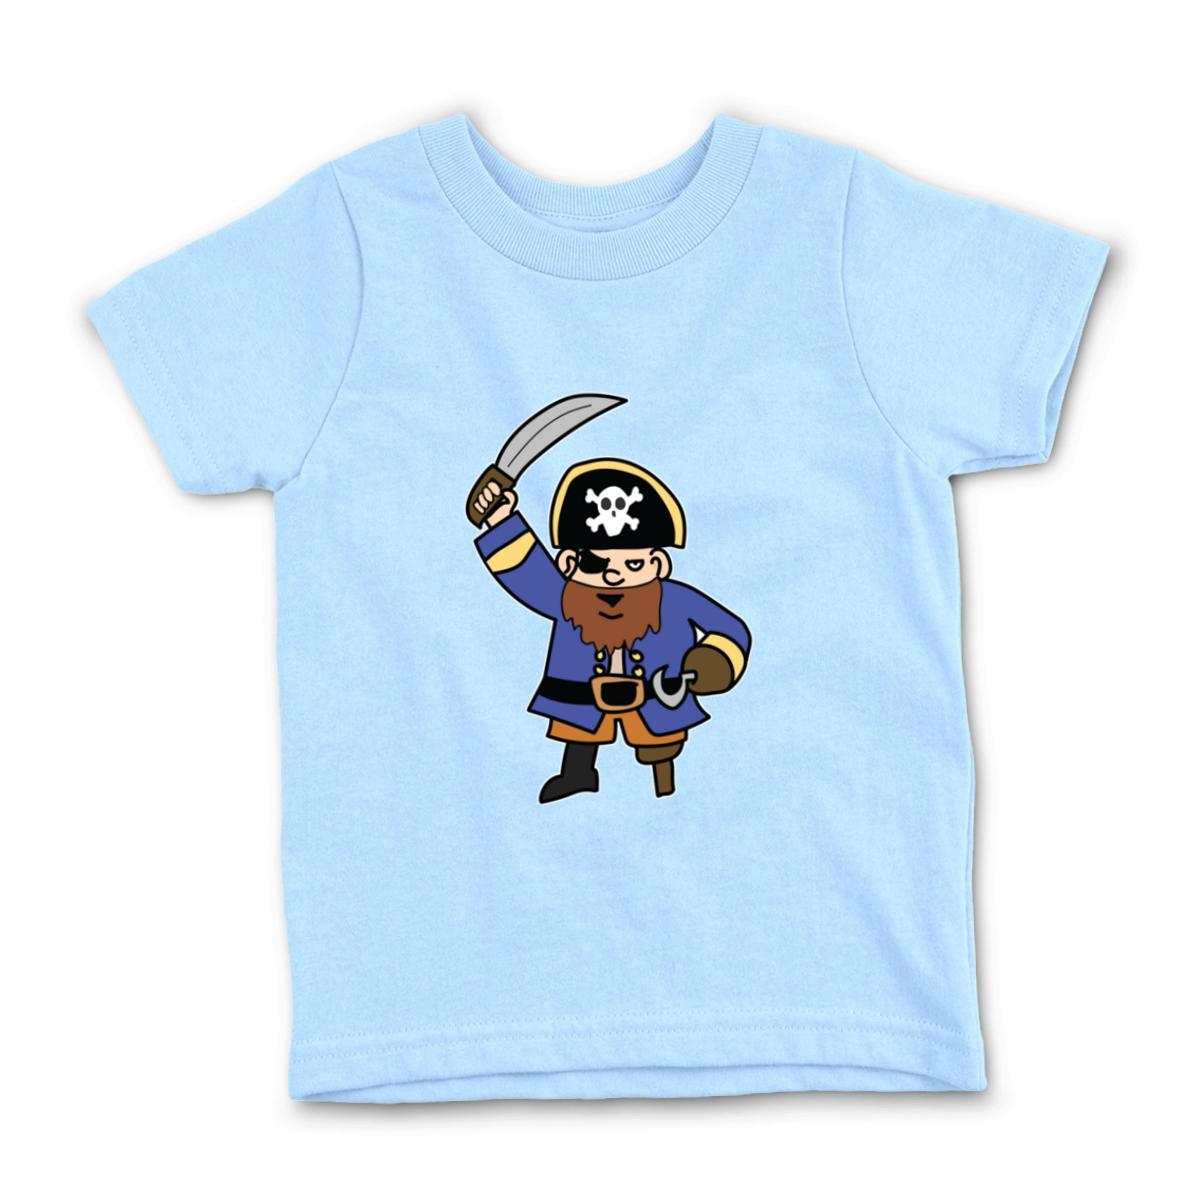 Pirate Kid's Tee Small light-blue